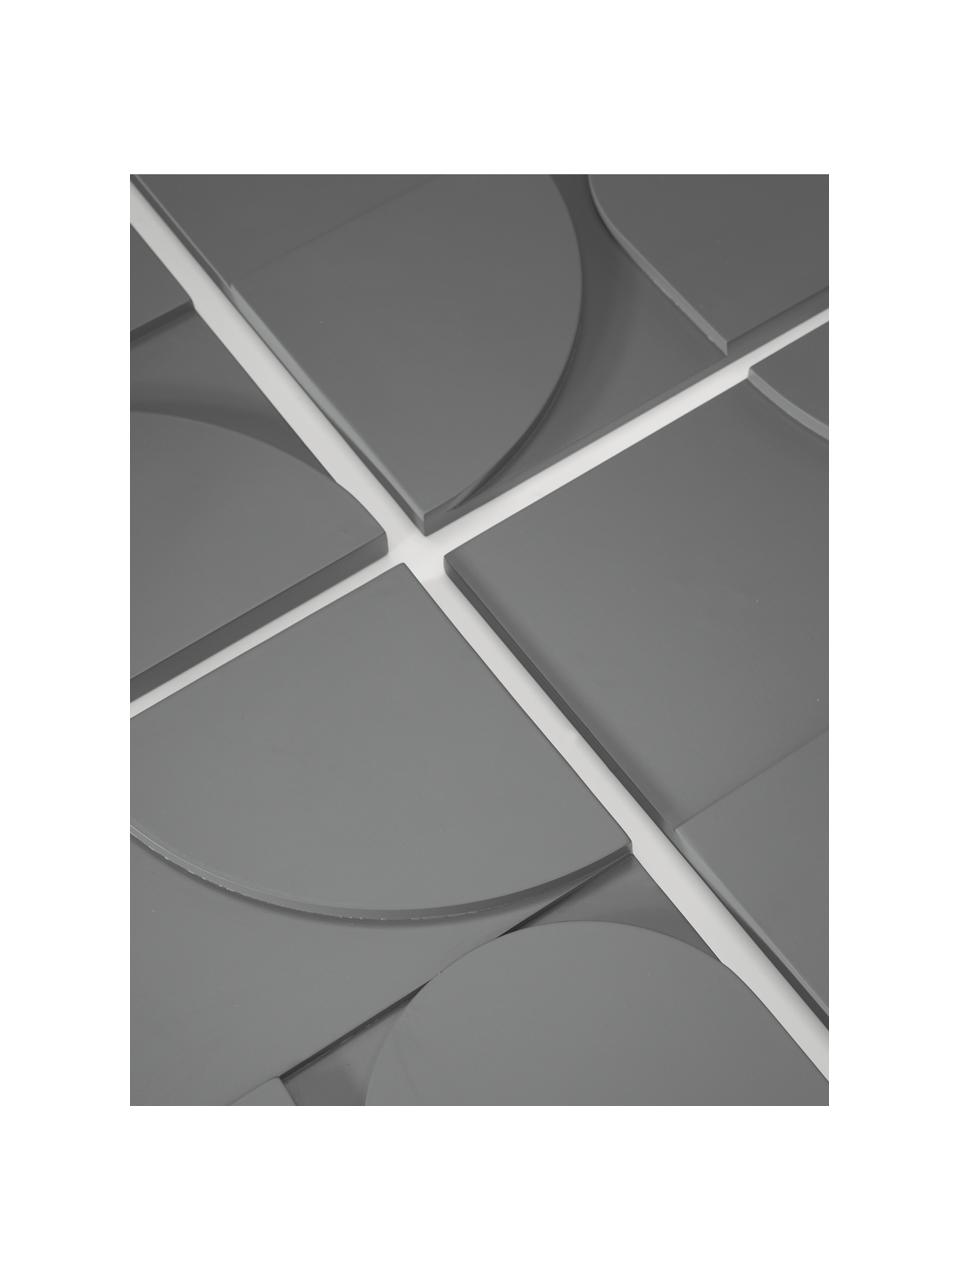 Wandobjekt-Set Massimo, 4er-Set, Mitteldichte Holzfaserplatte (MDF), Dunkelgrau, B 80 x H 80 cm